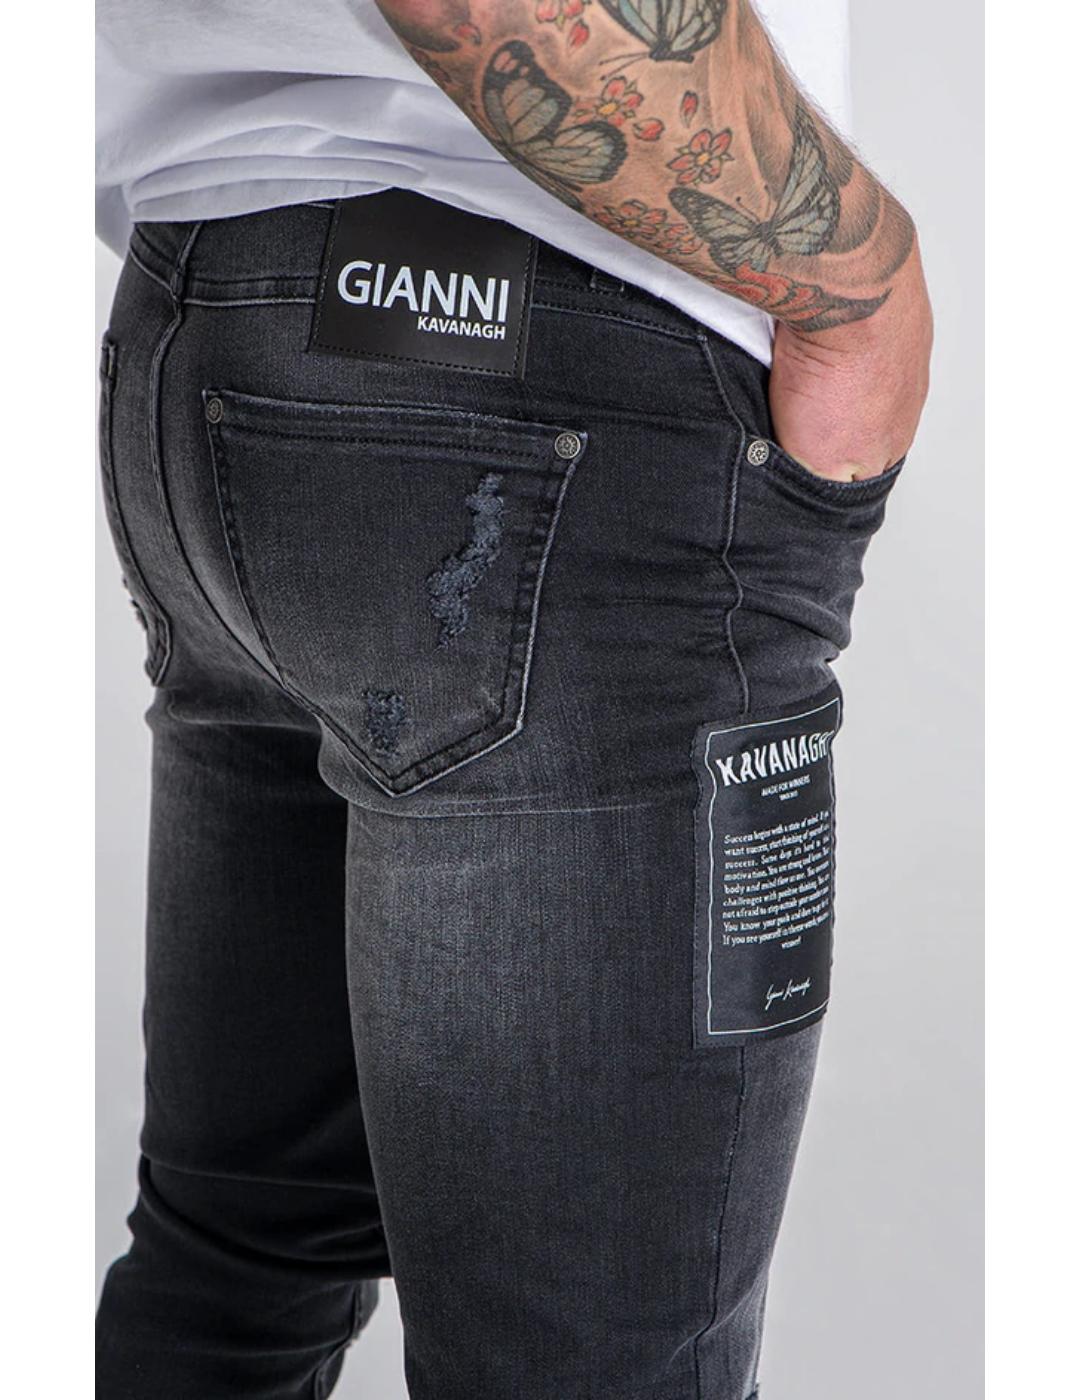 fácilmente métrico Puerto marítimo Jeans Gianni Kavanagh barcode negro para hombre